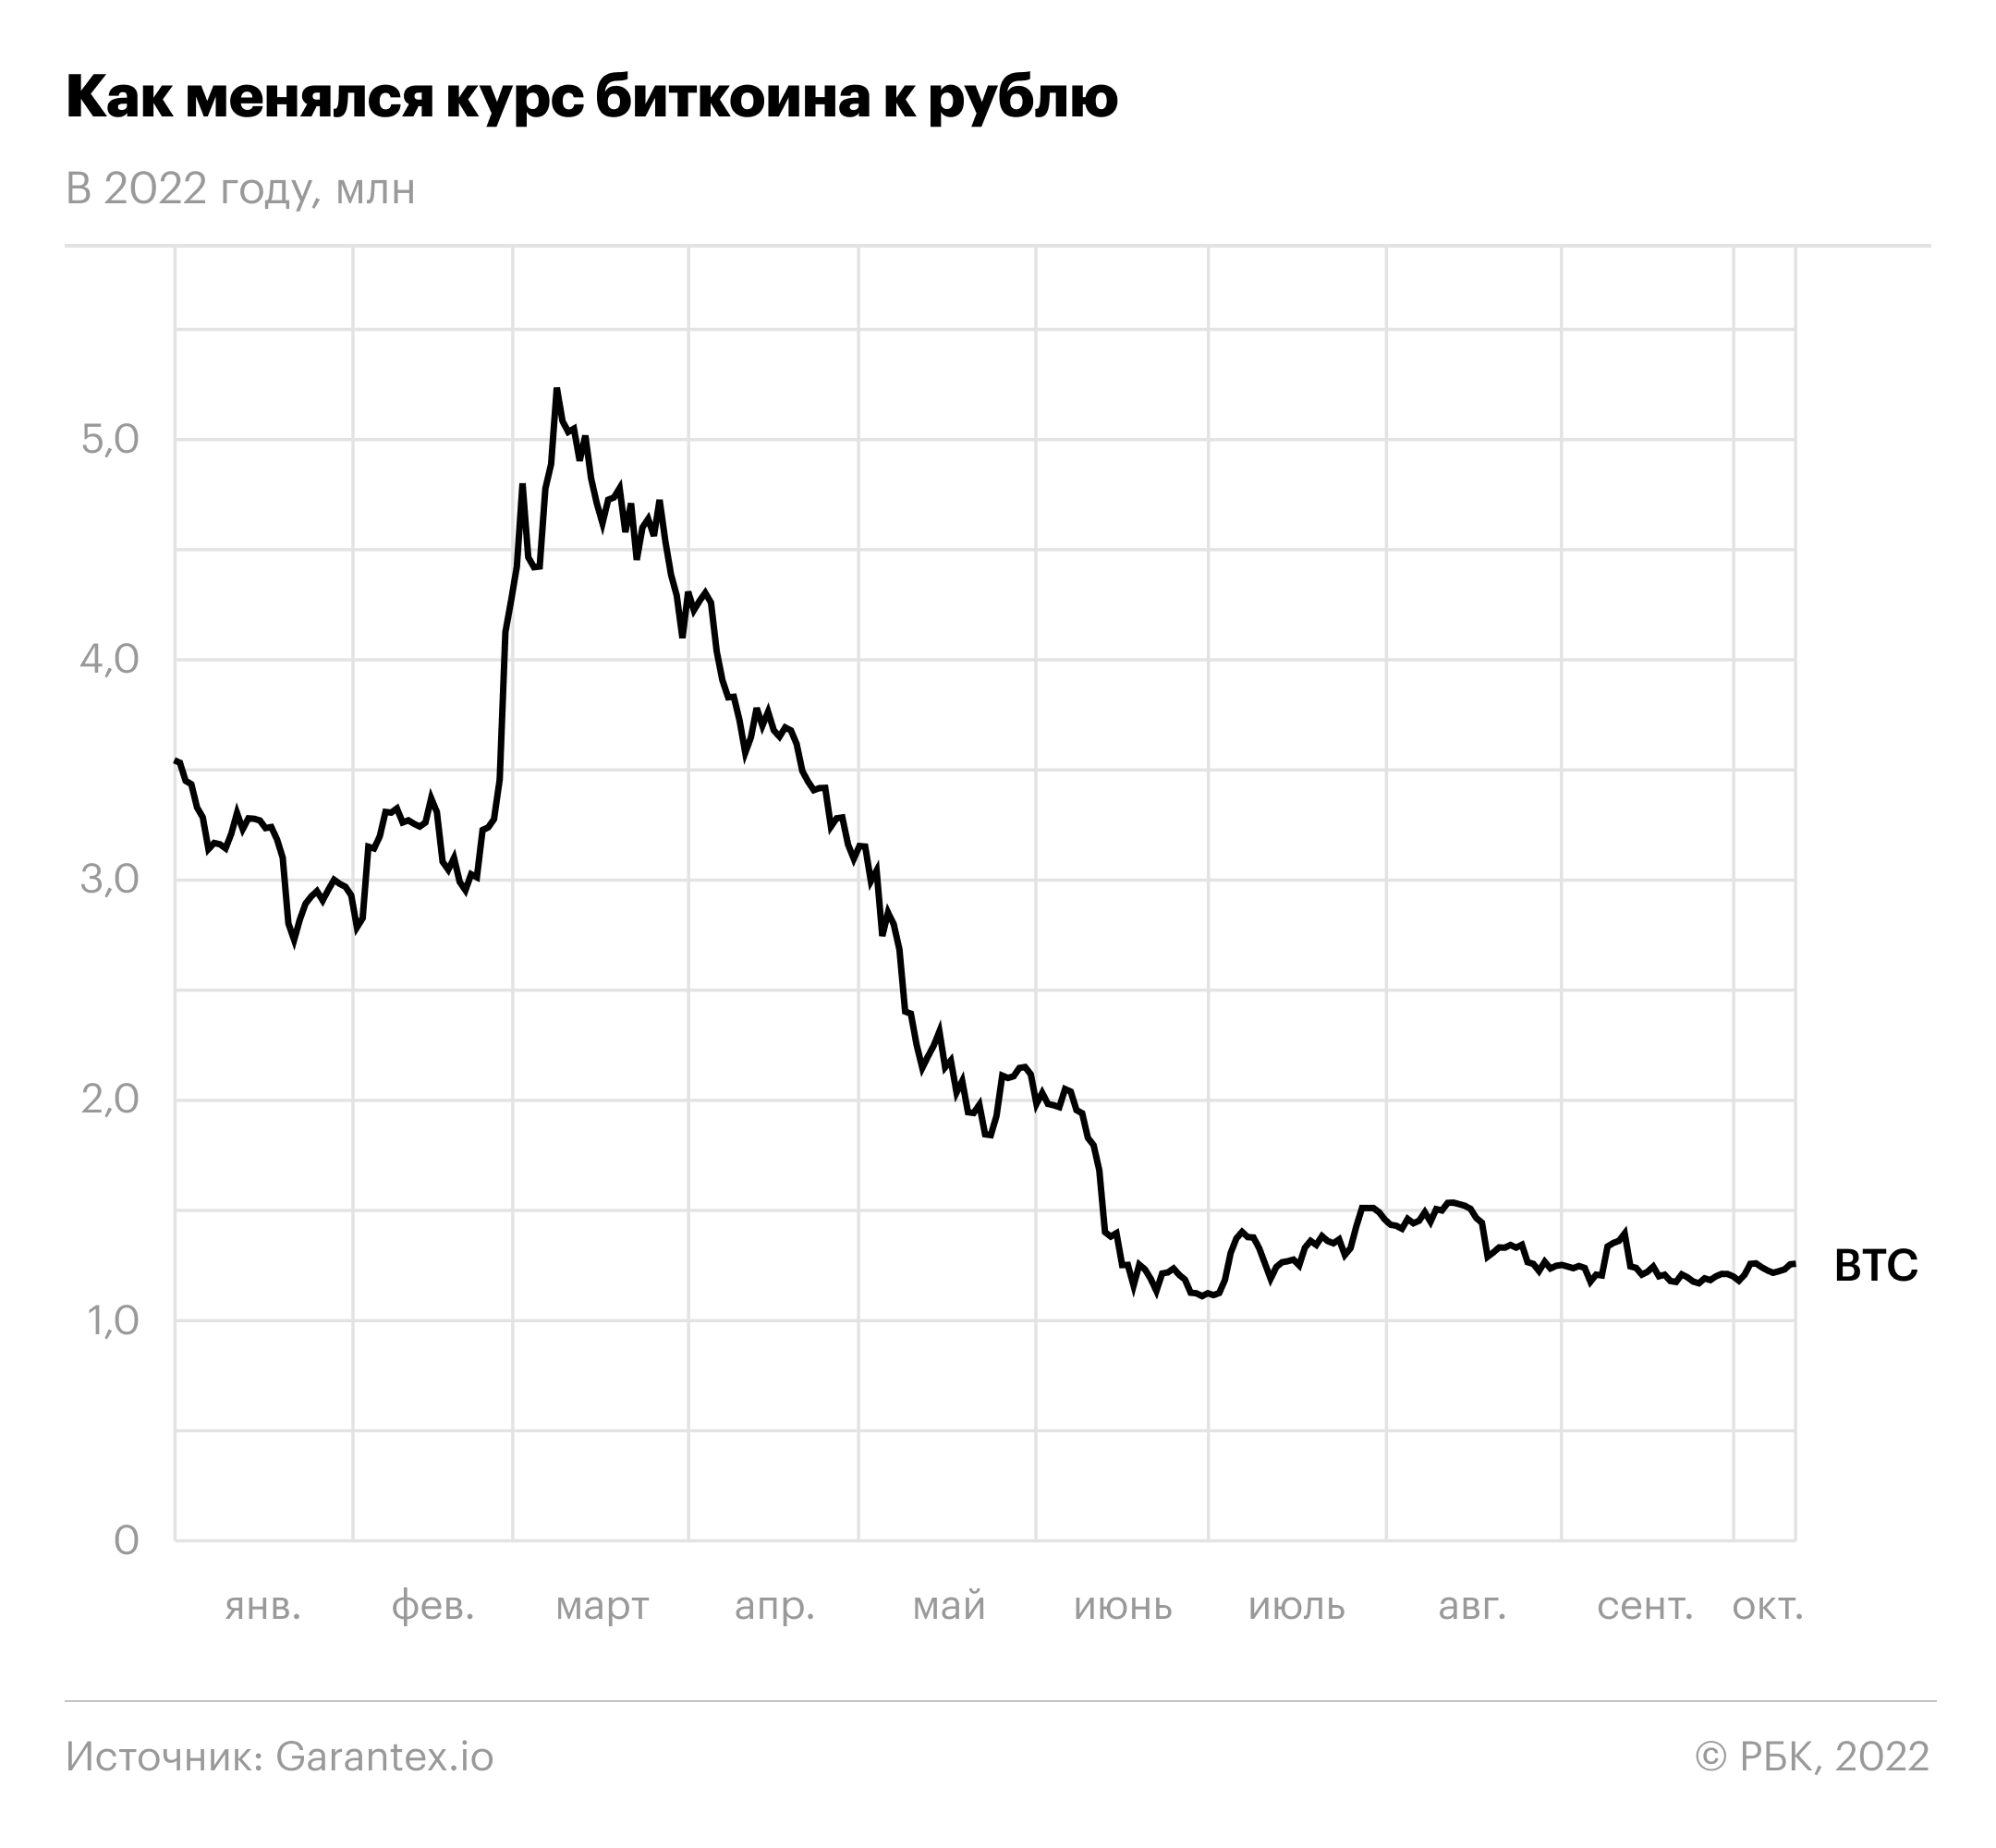 Курс доллара к рублю рф на сегодня. Динамика доллара к рублю к 2022. Динамика курса рубля за 2022. Динамика курса рубля к доллару. Динамика юаня к рублю.